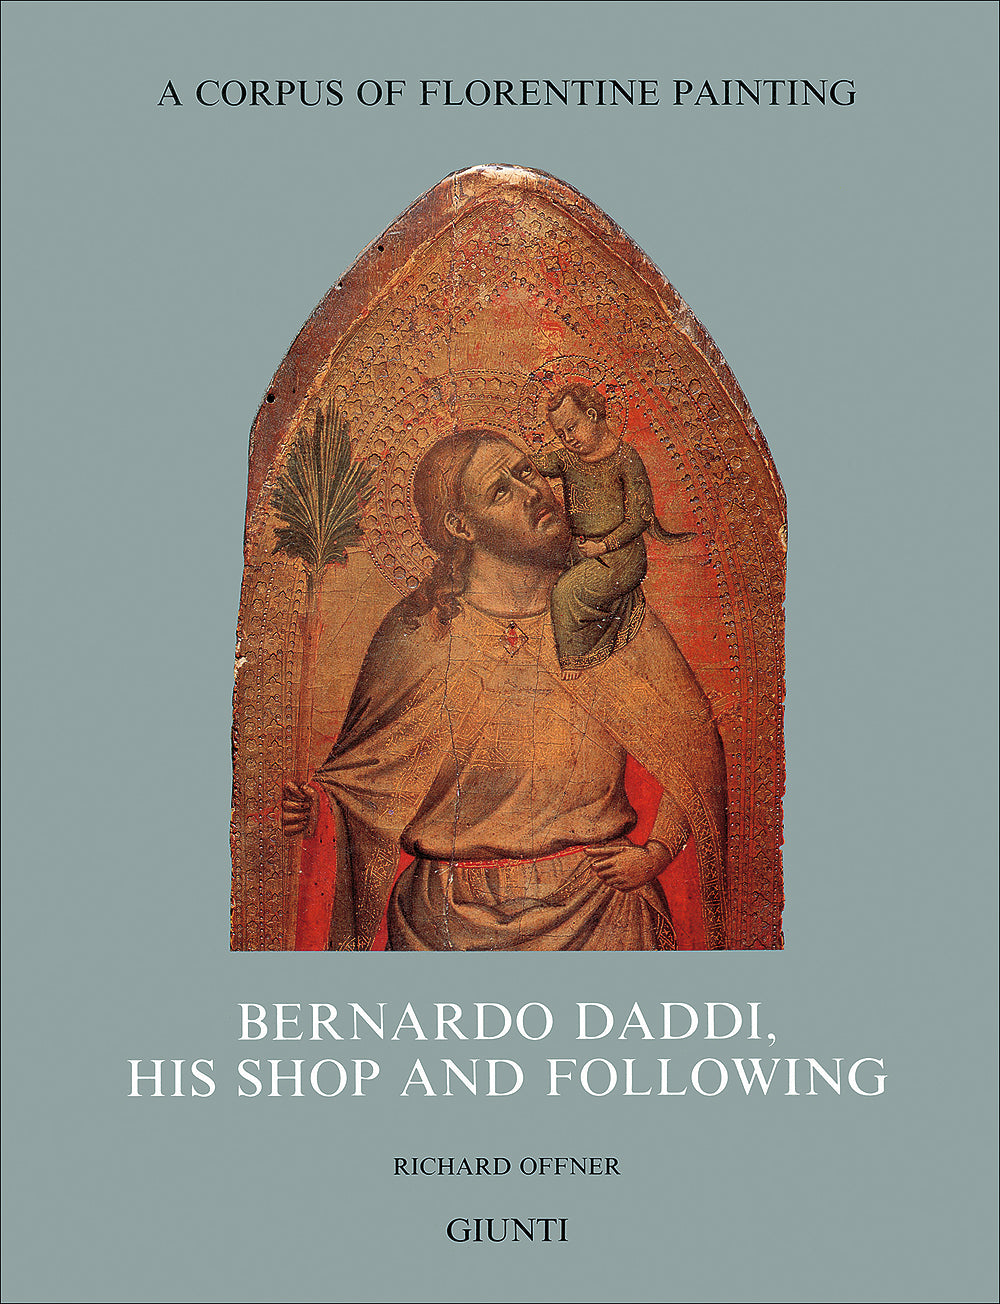 Bernardo Daddi, his shop and following::Section III, volume IV